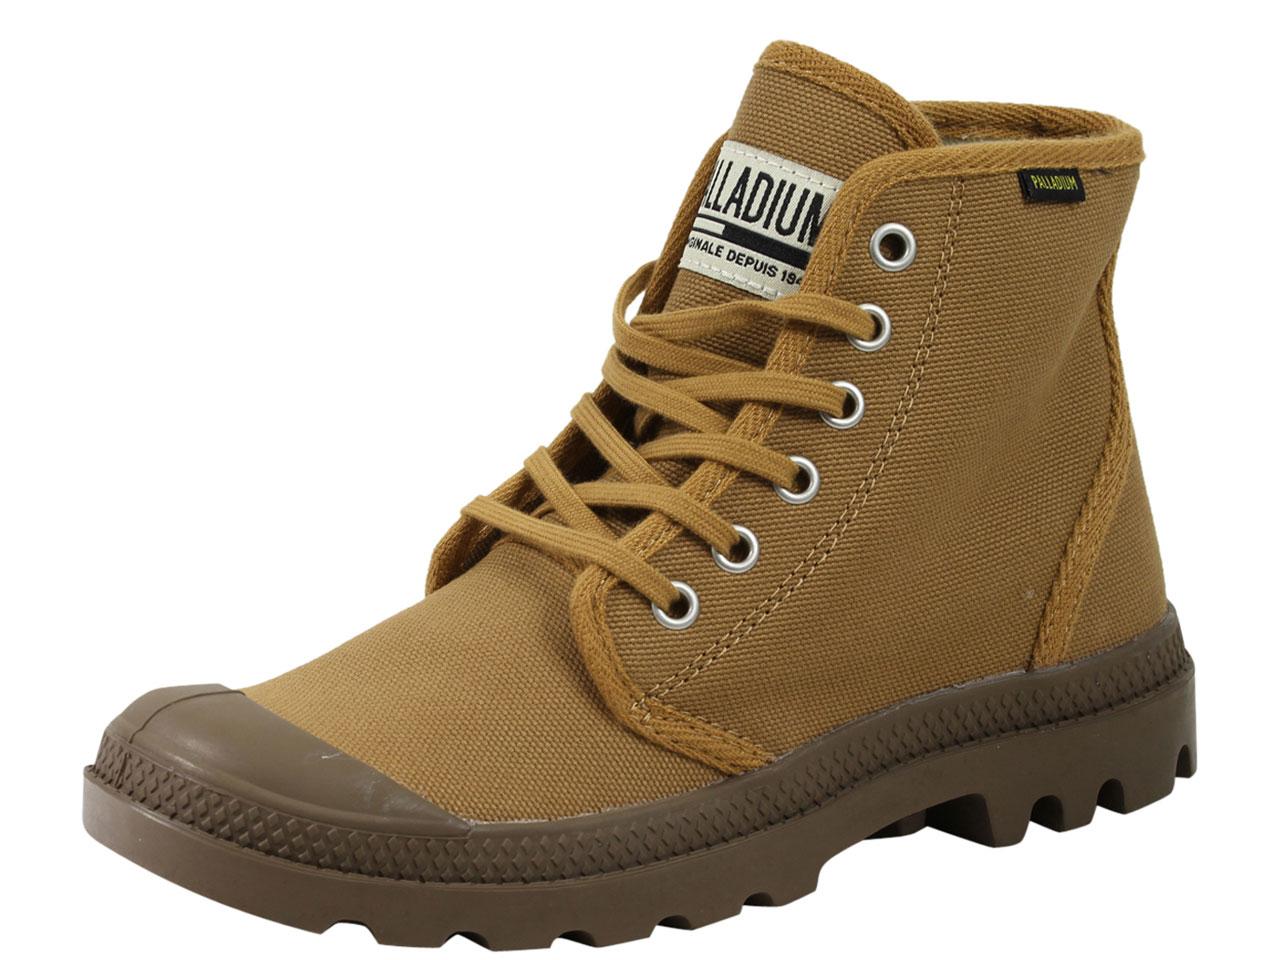 Palladium Men's Pampa Hi Originale Chukka Boots Shoes - Brown - 4.5 D(M) US/6 B(M) US